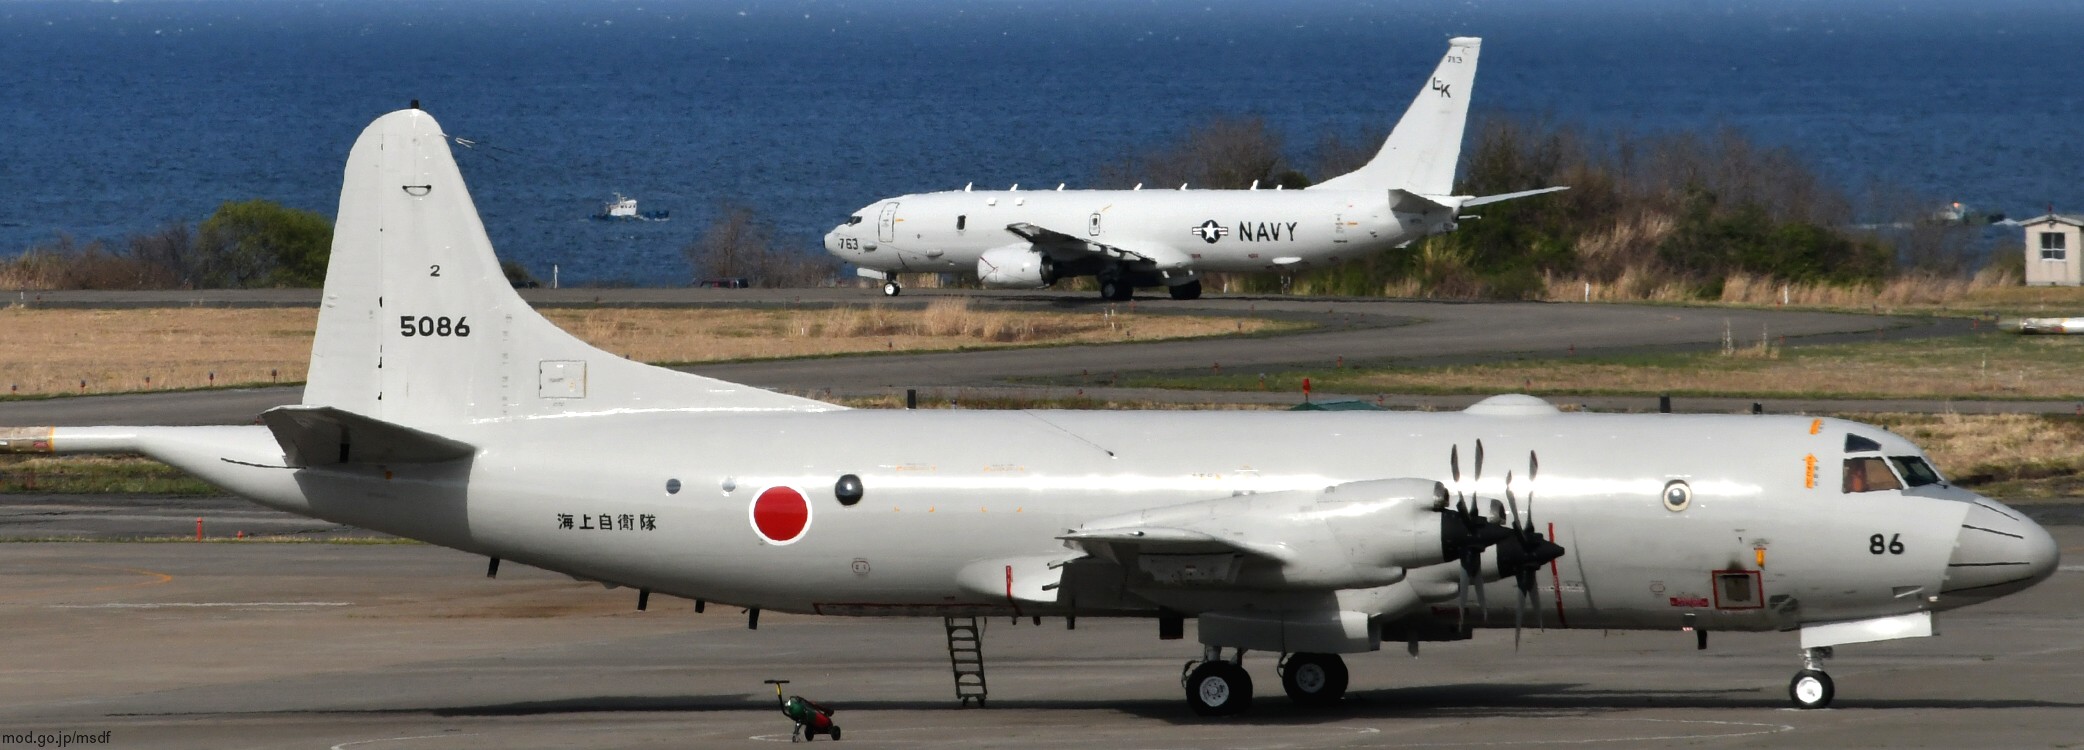 kawasaki p-3c orion patrol aircraft mpa japan maritime self defense force jmsdf 5086 02